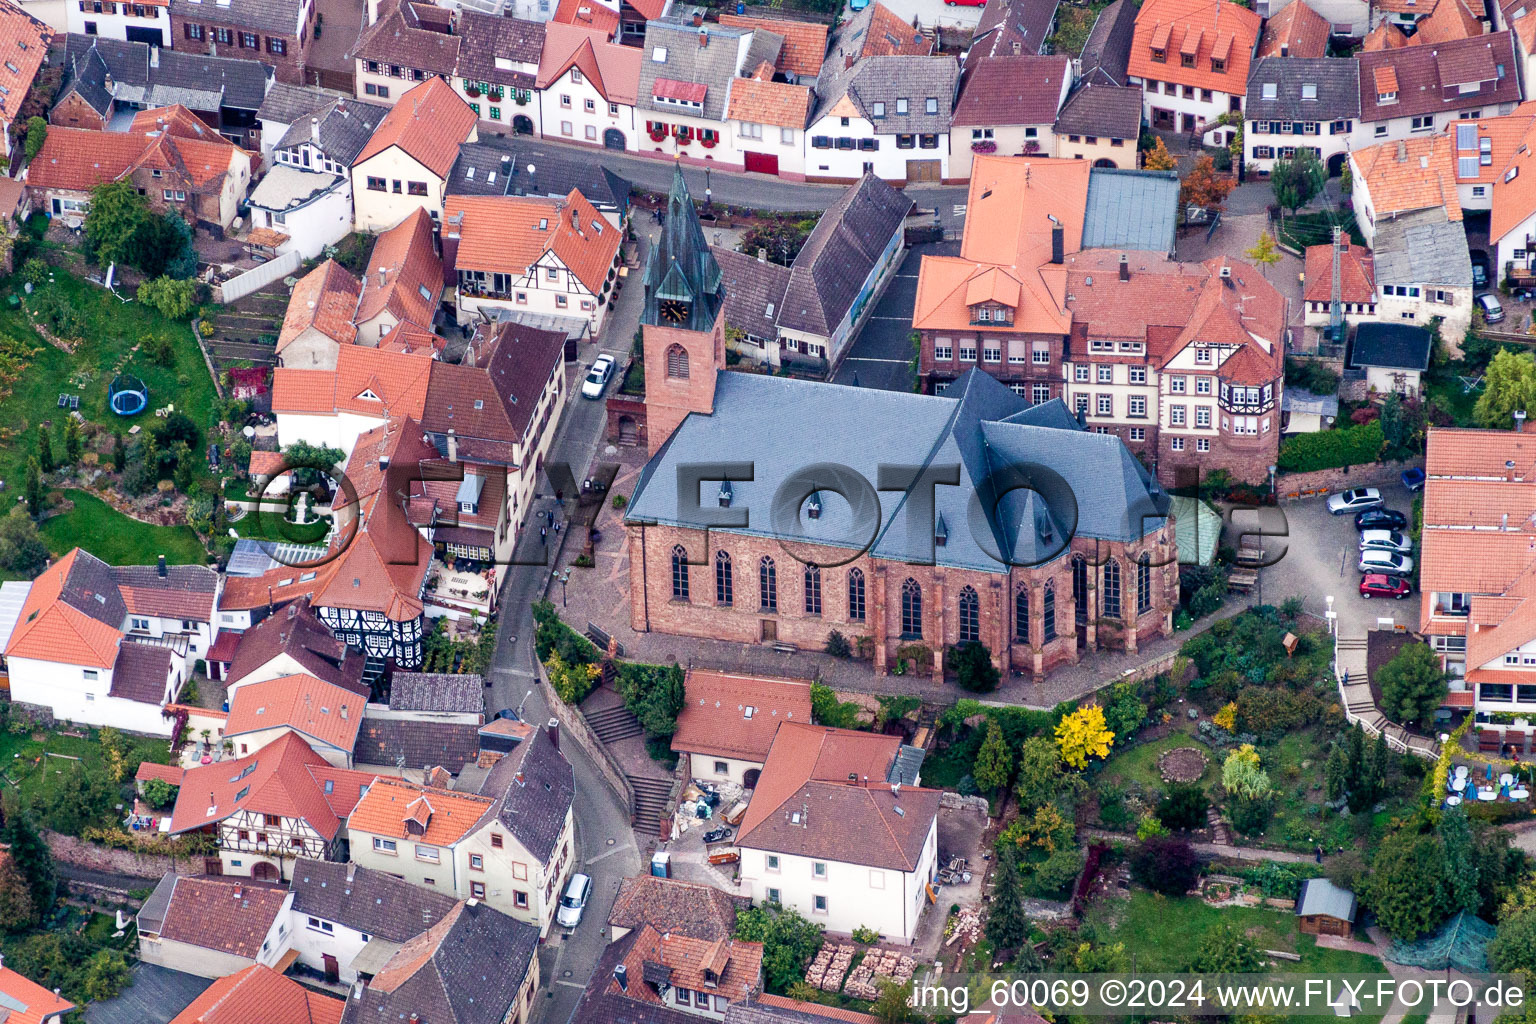 Church building Pfarrkirche St. Martin in St. Martin in Sankt Martin in the state Rhineland-Palatinate, Germany